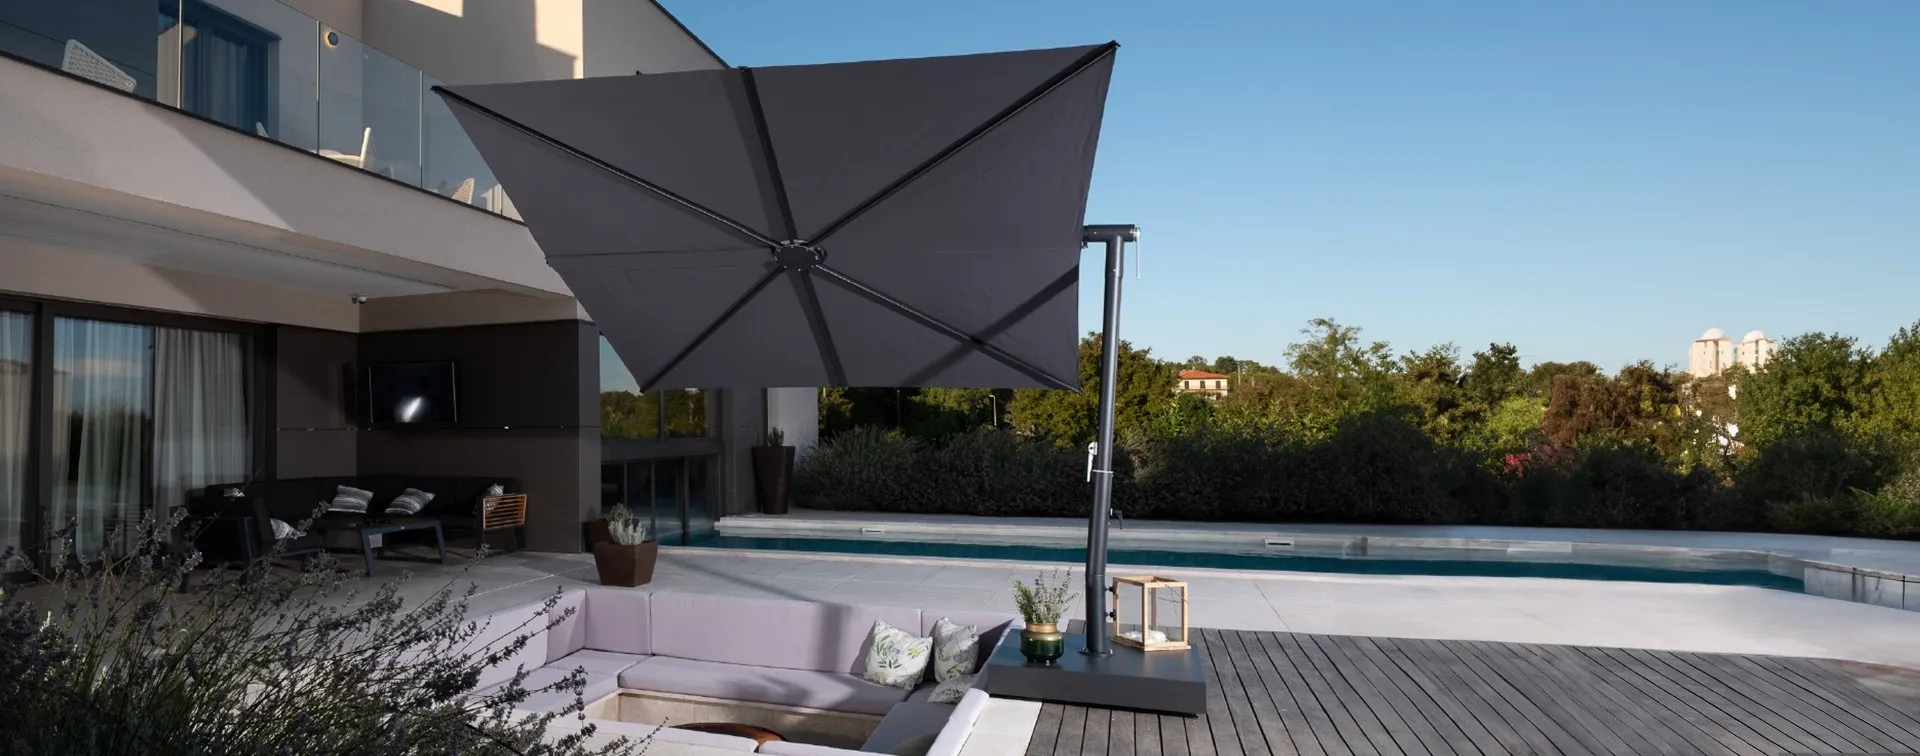 Flat design parasols - Scolaro Parasol